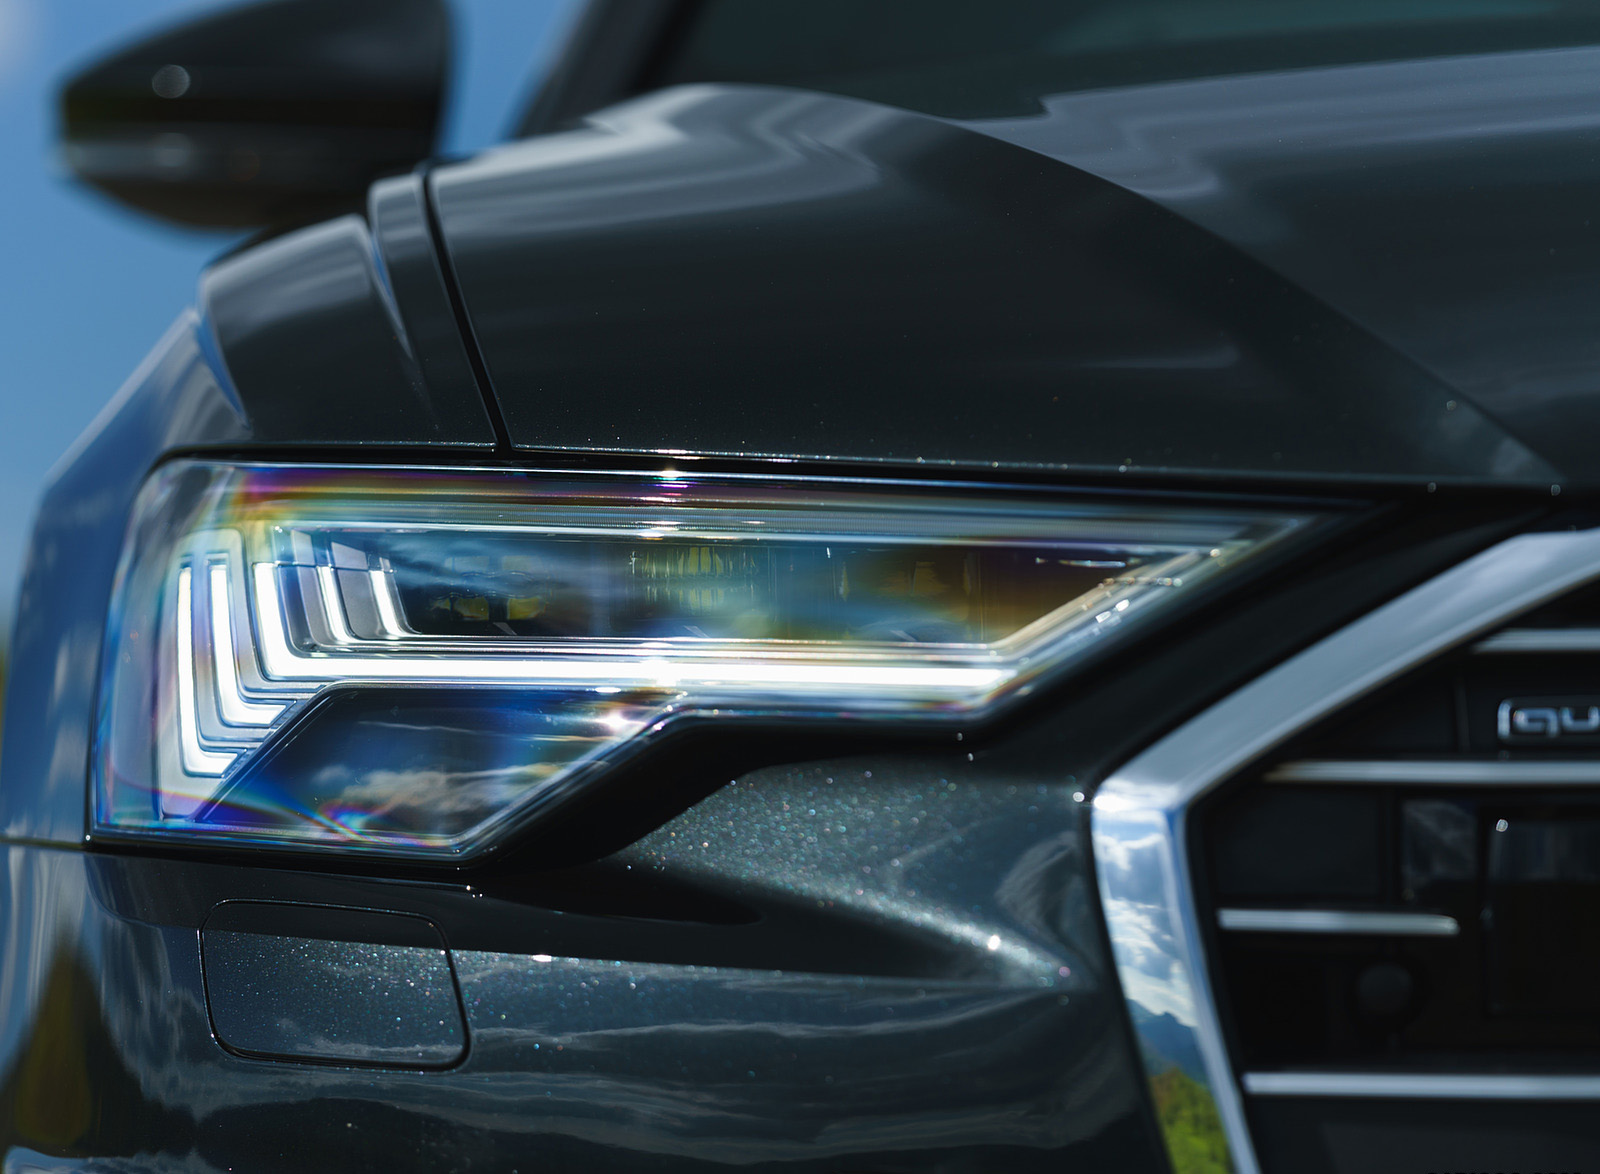 2019 Audi A6 Avant 50 TDI Quattro (UK-Spec) Headlight Wallpapers #32 of 62